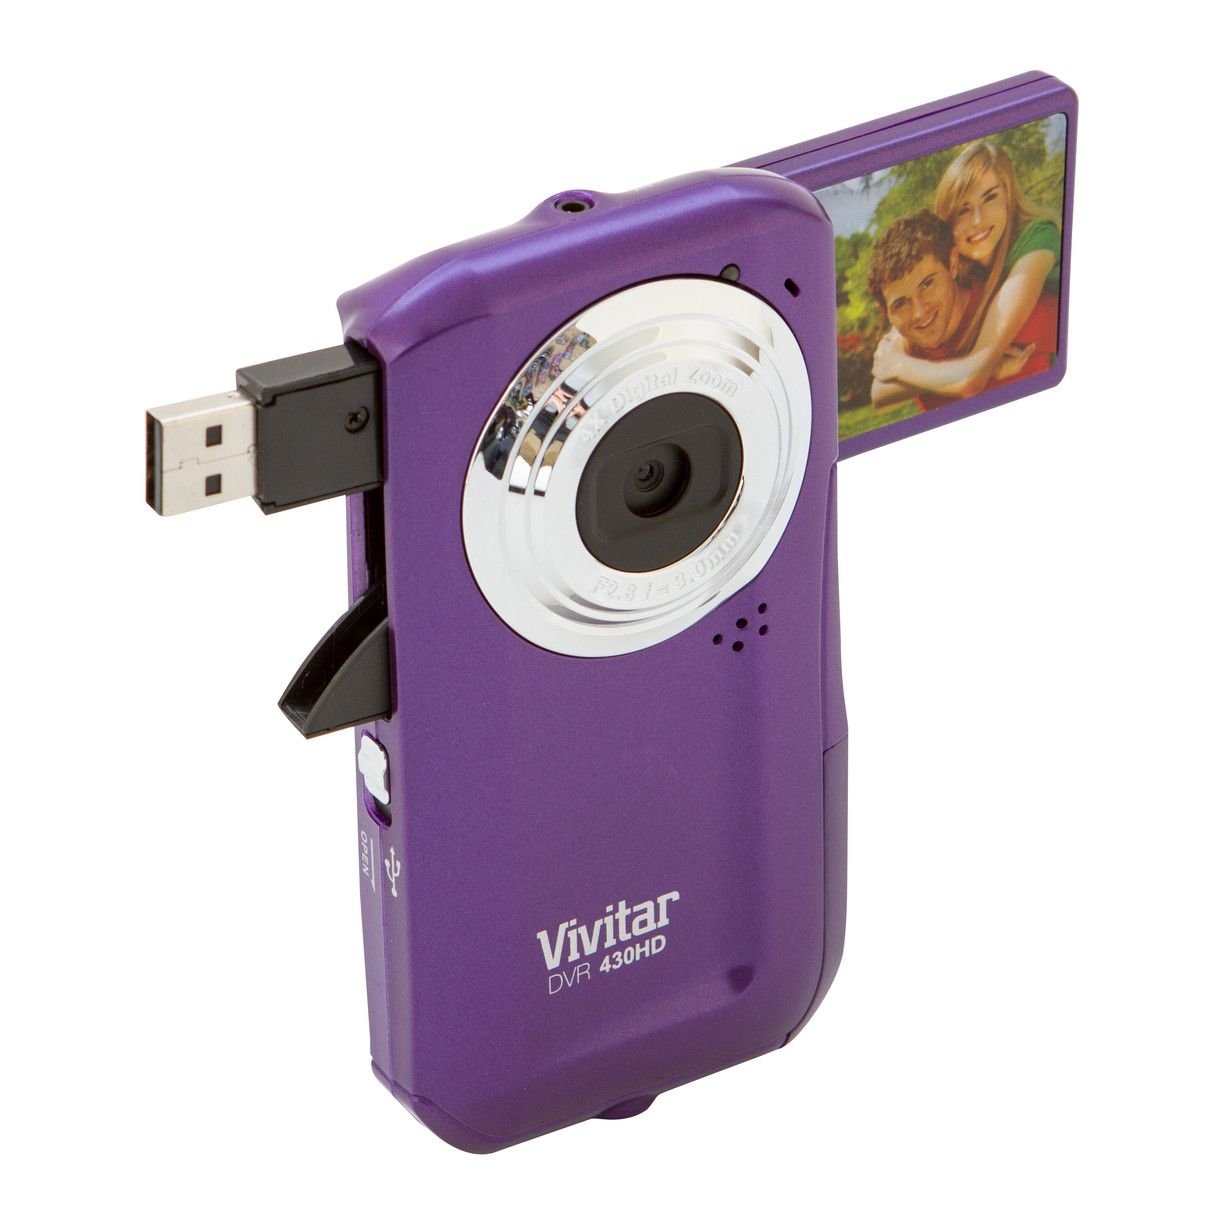 Vivitar 410 / 610 Digital Video Camera, Colors and Styles May Vary